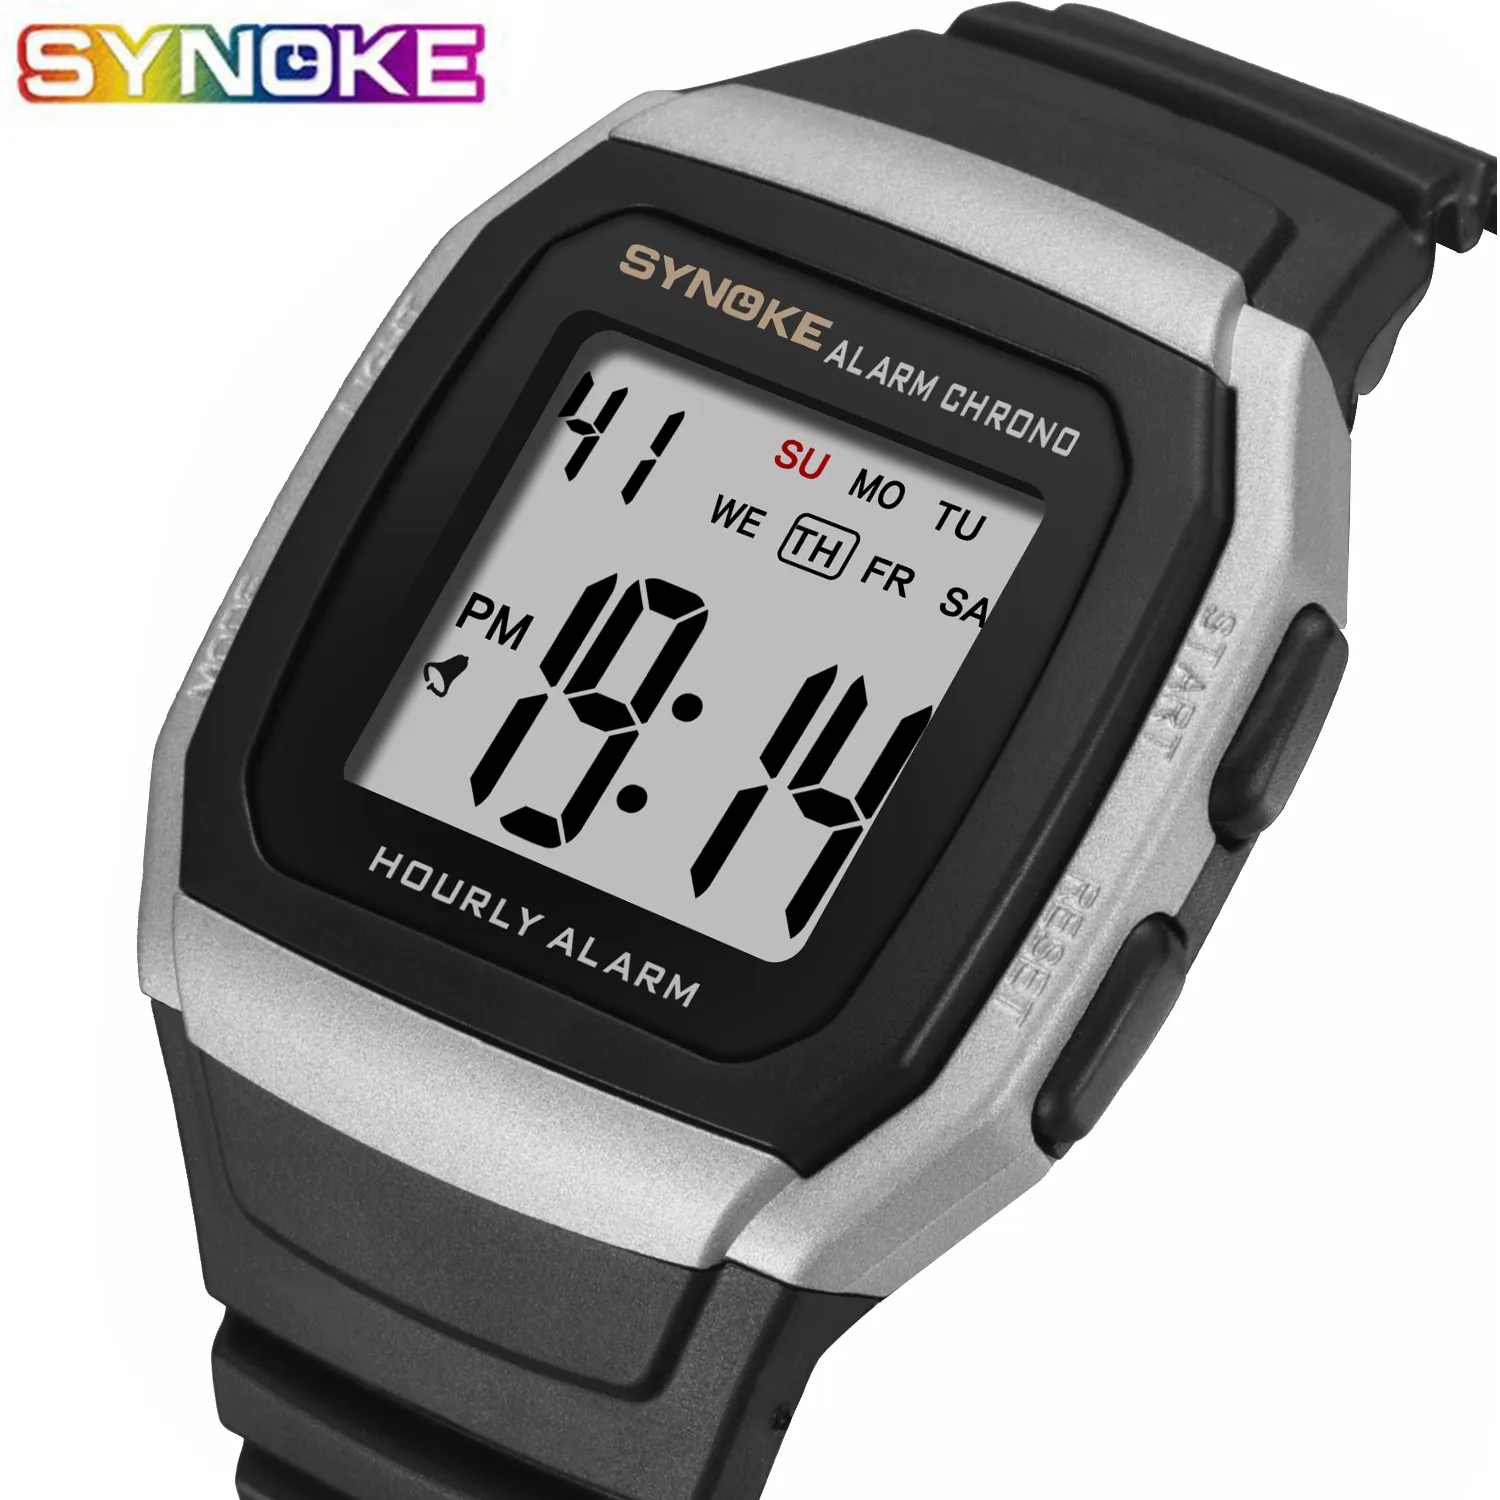 Synoke Sports Watches Reloj Hombre Life Watch Watch Watch Lad